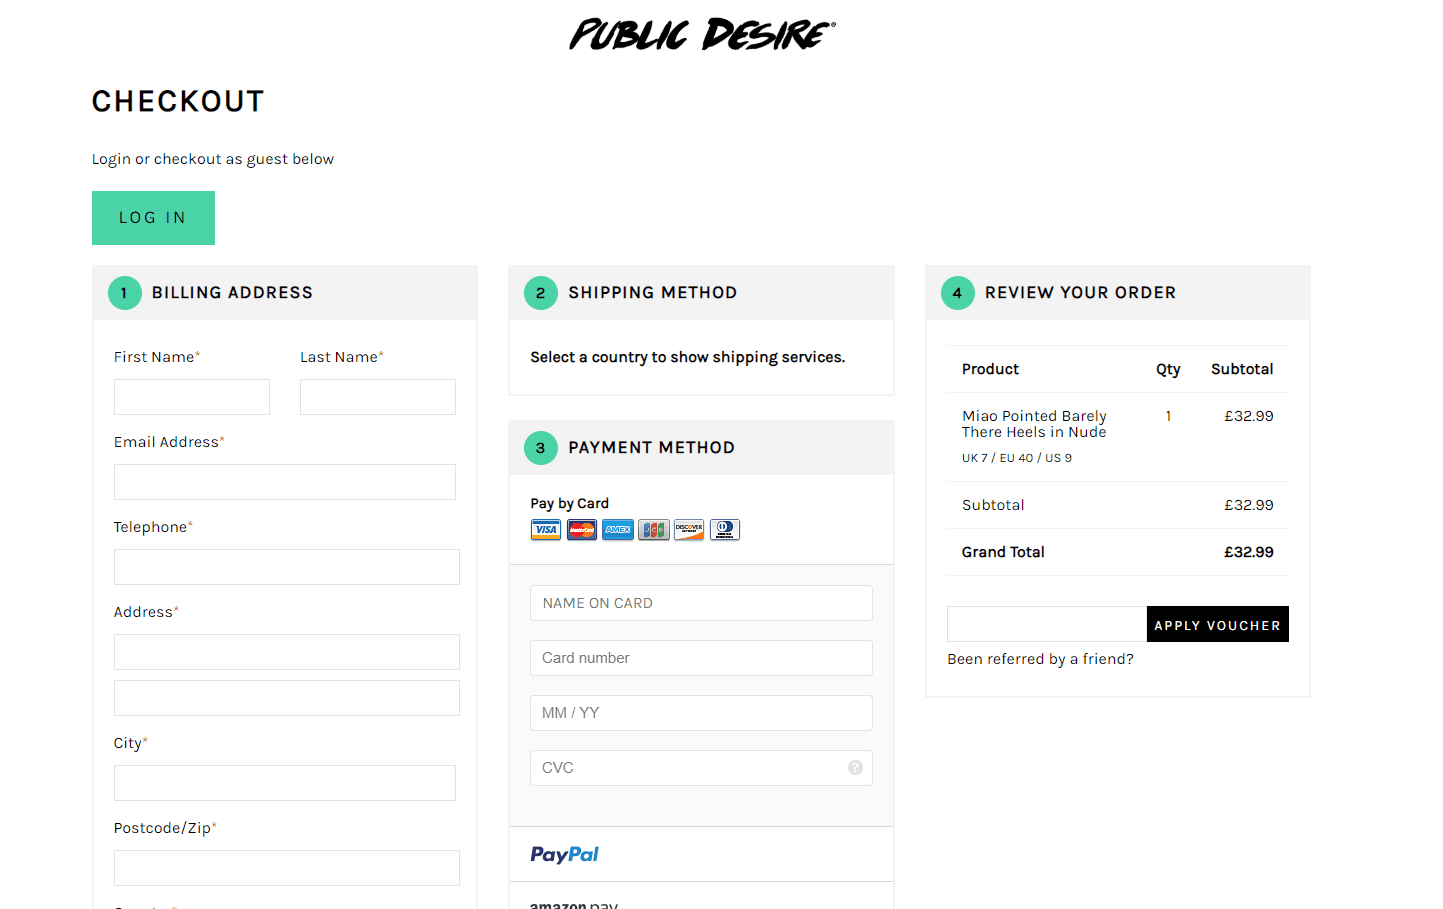 public desire check out